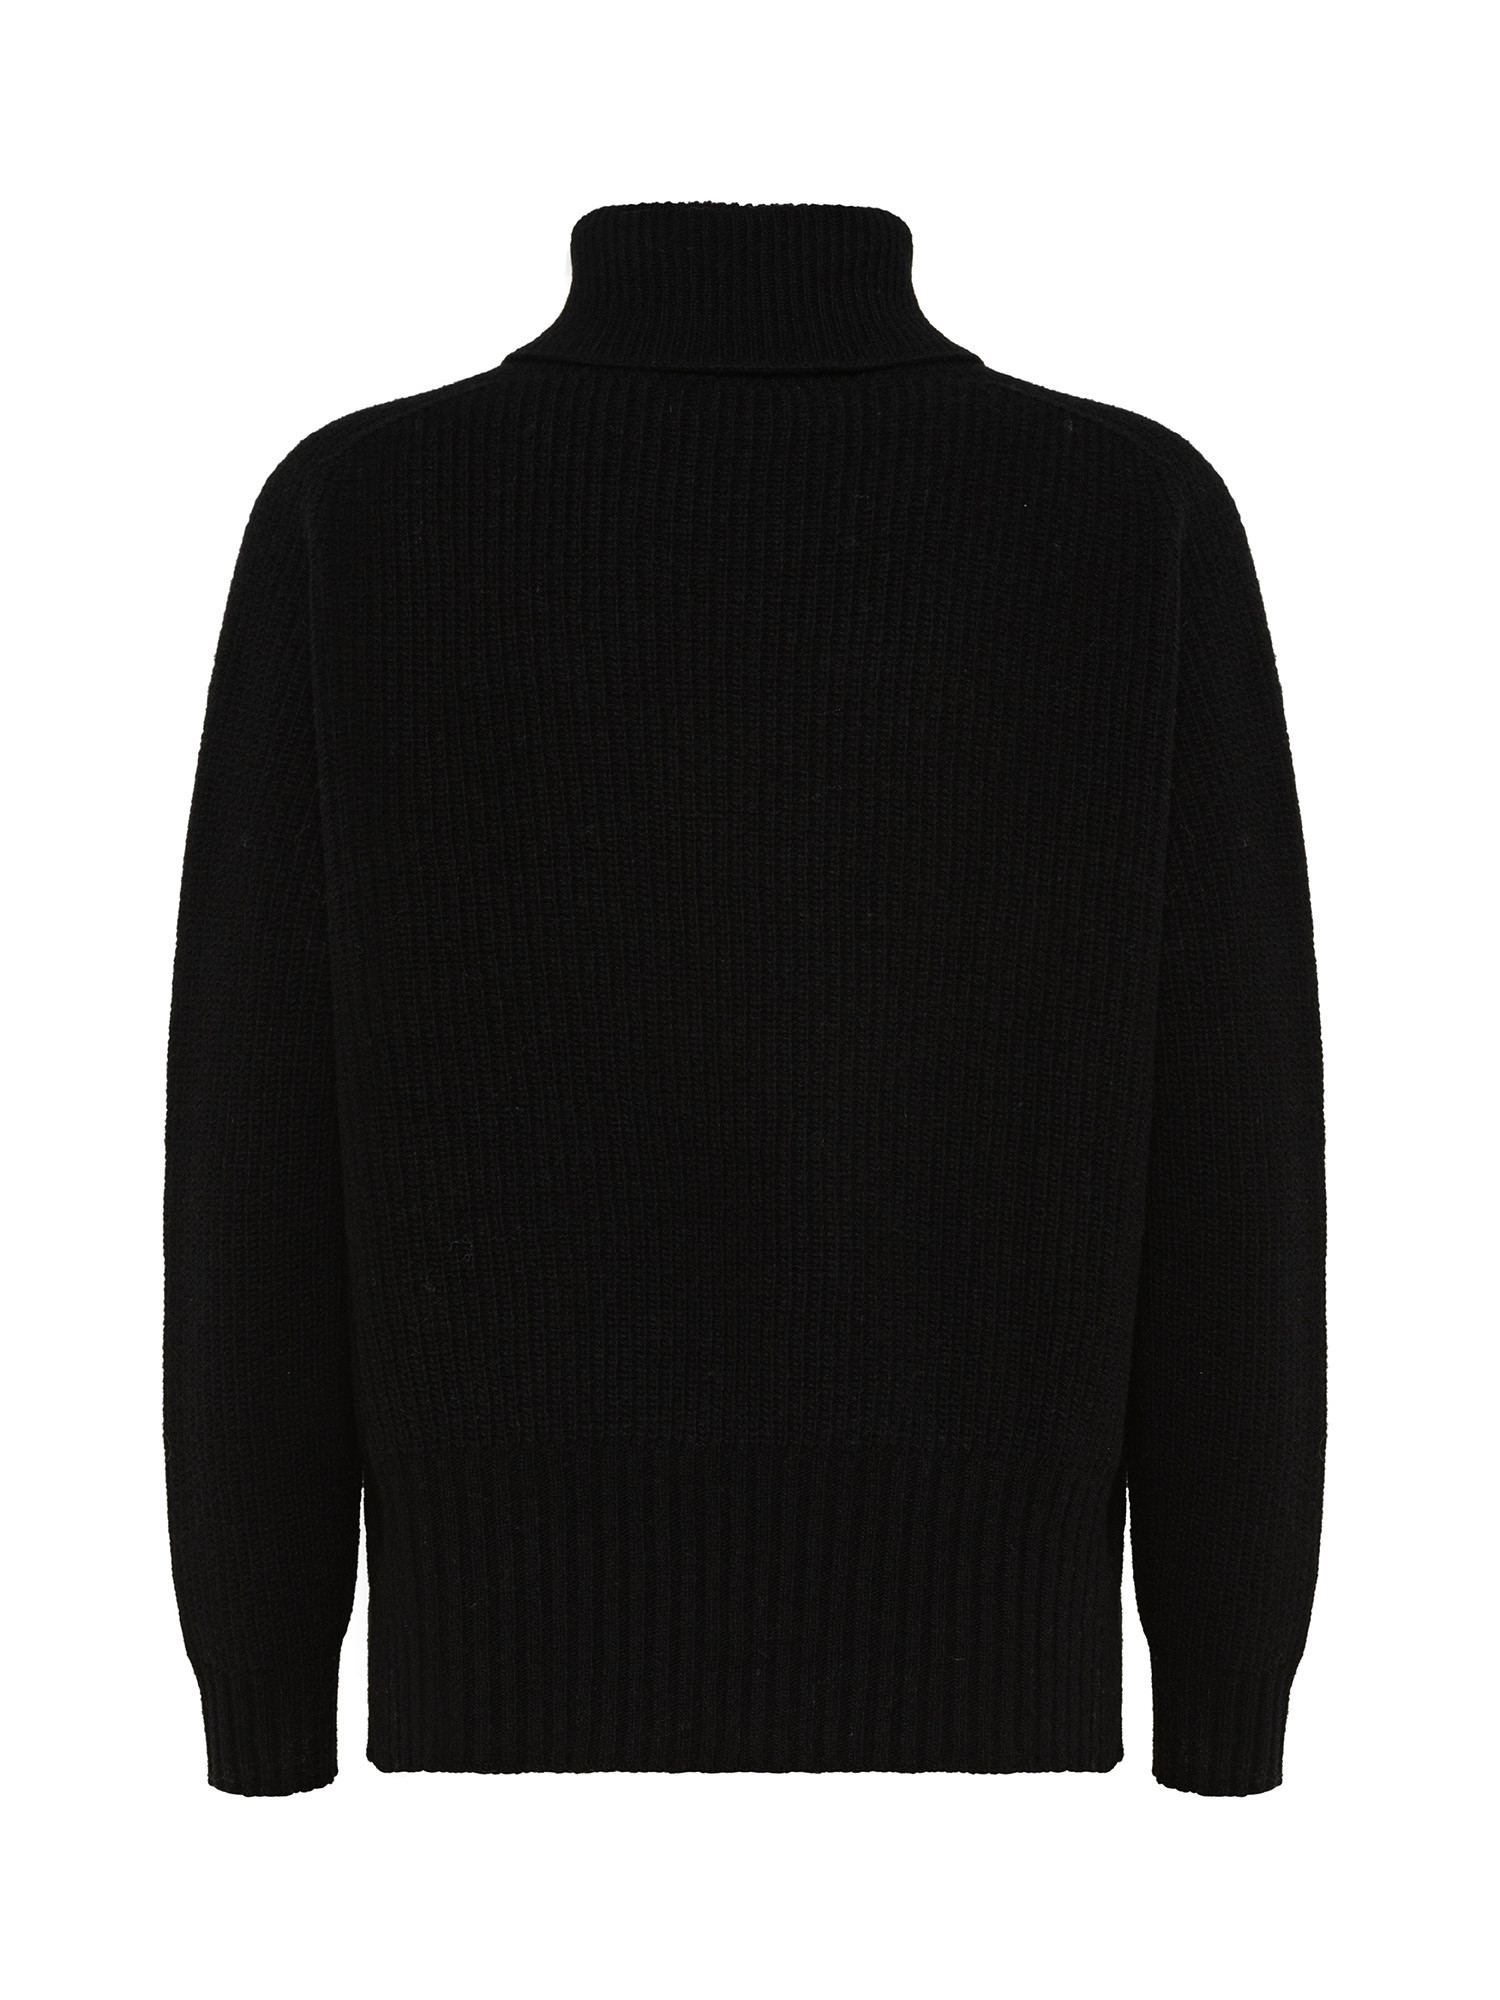 K Collection - Carded wool turtleneck pullover, Black, large image number 0